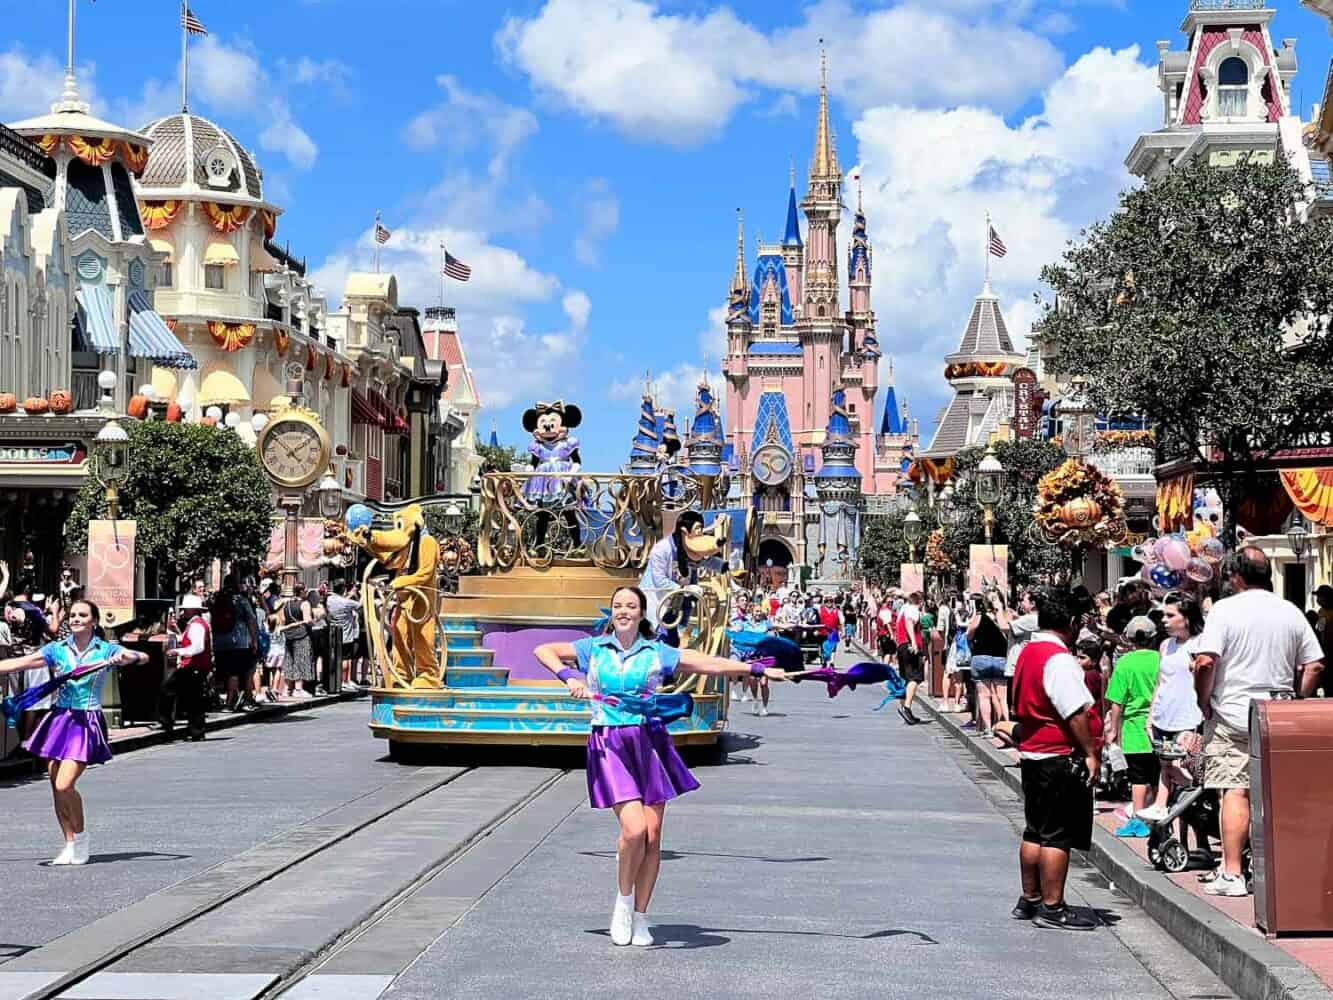 Cavalcade going down Main Street, Magic Kingdom, Disney World